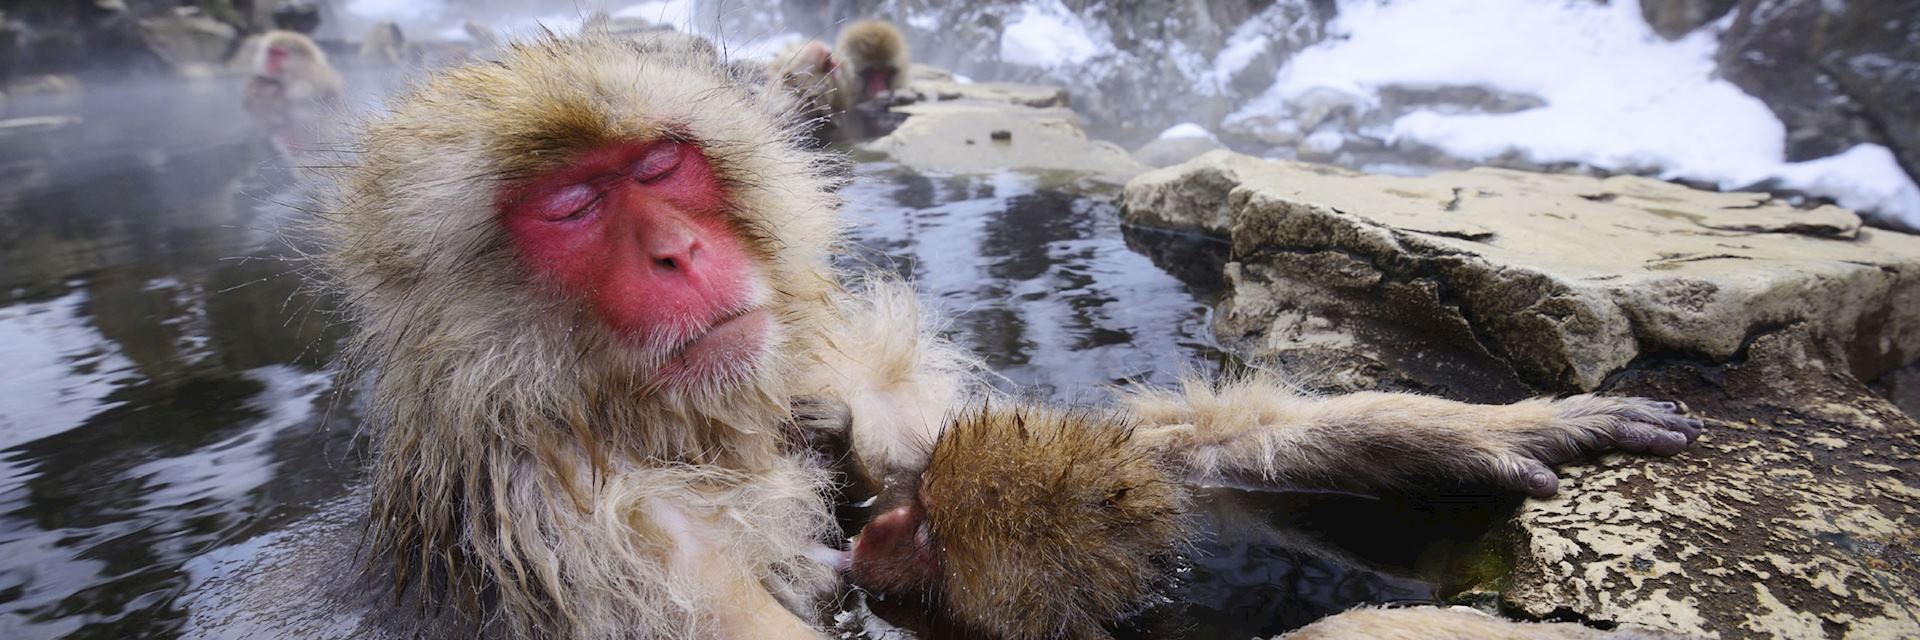 Snow monkeys relax in the hot springs of Yudanaka